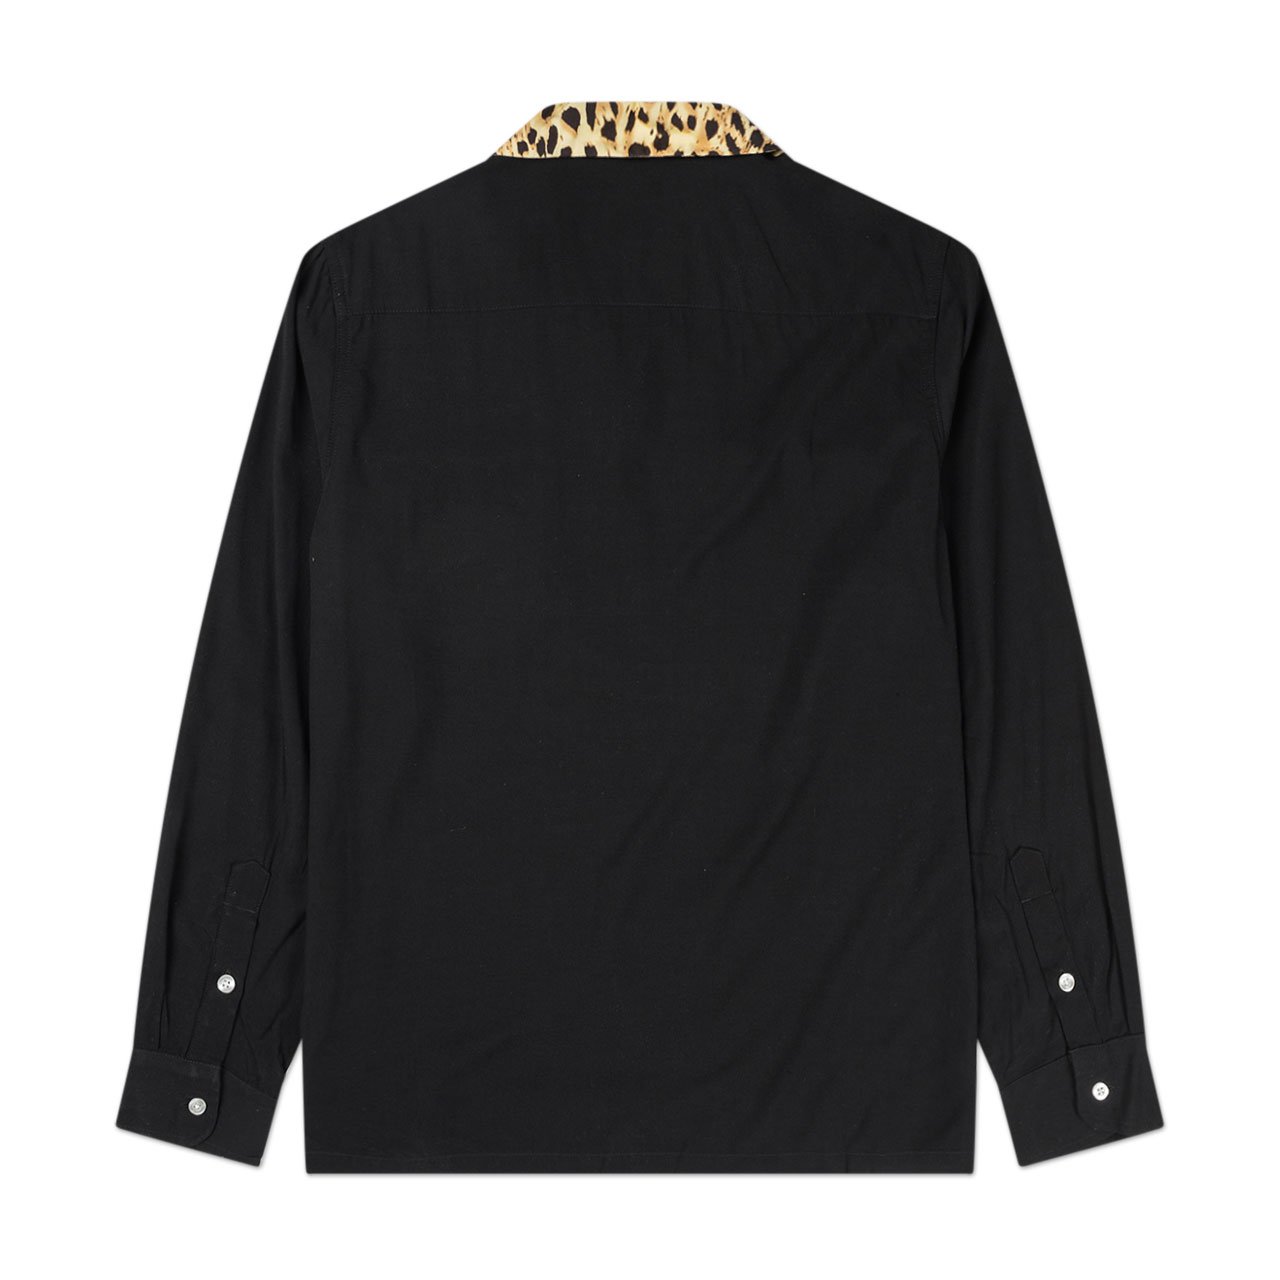 carhartt wip x wacko maria 50's shirt (black / leopard print) - i028240.0d6.90.03 - a.plus - Image - 2